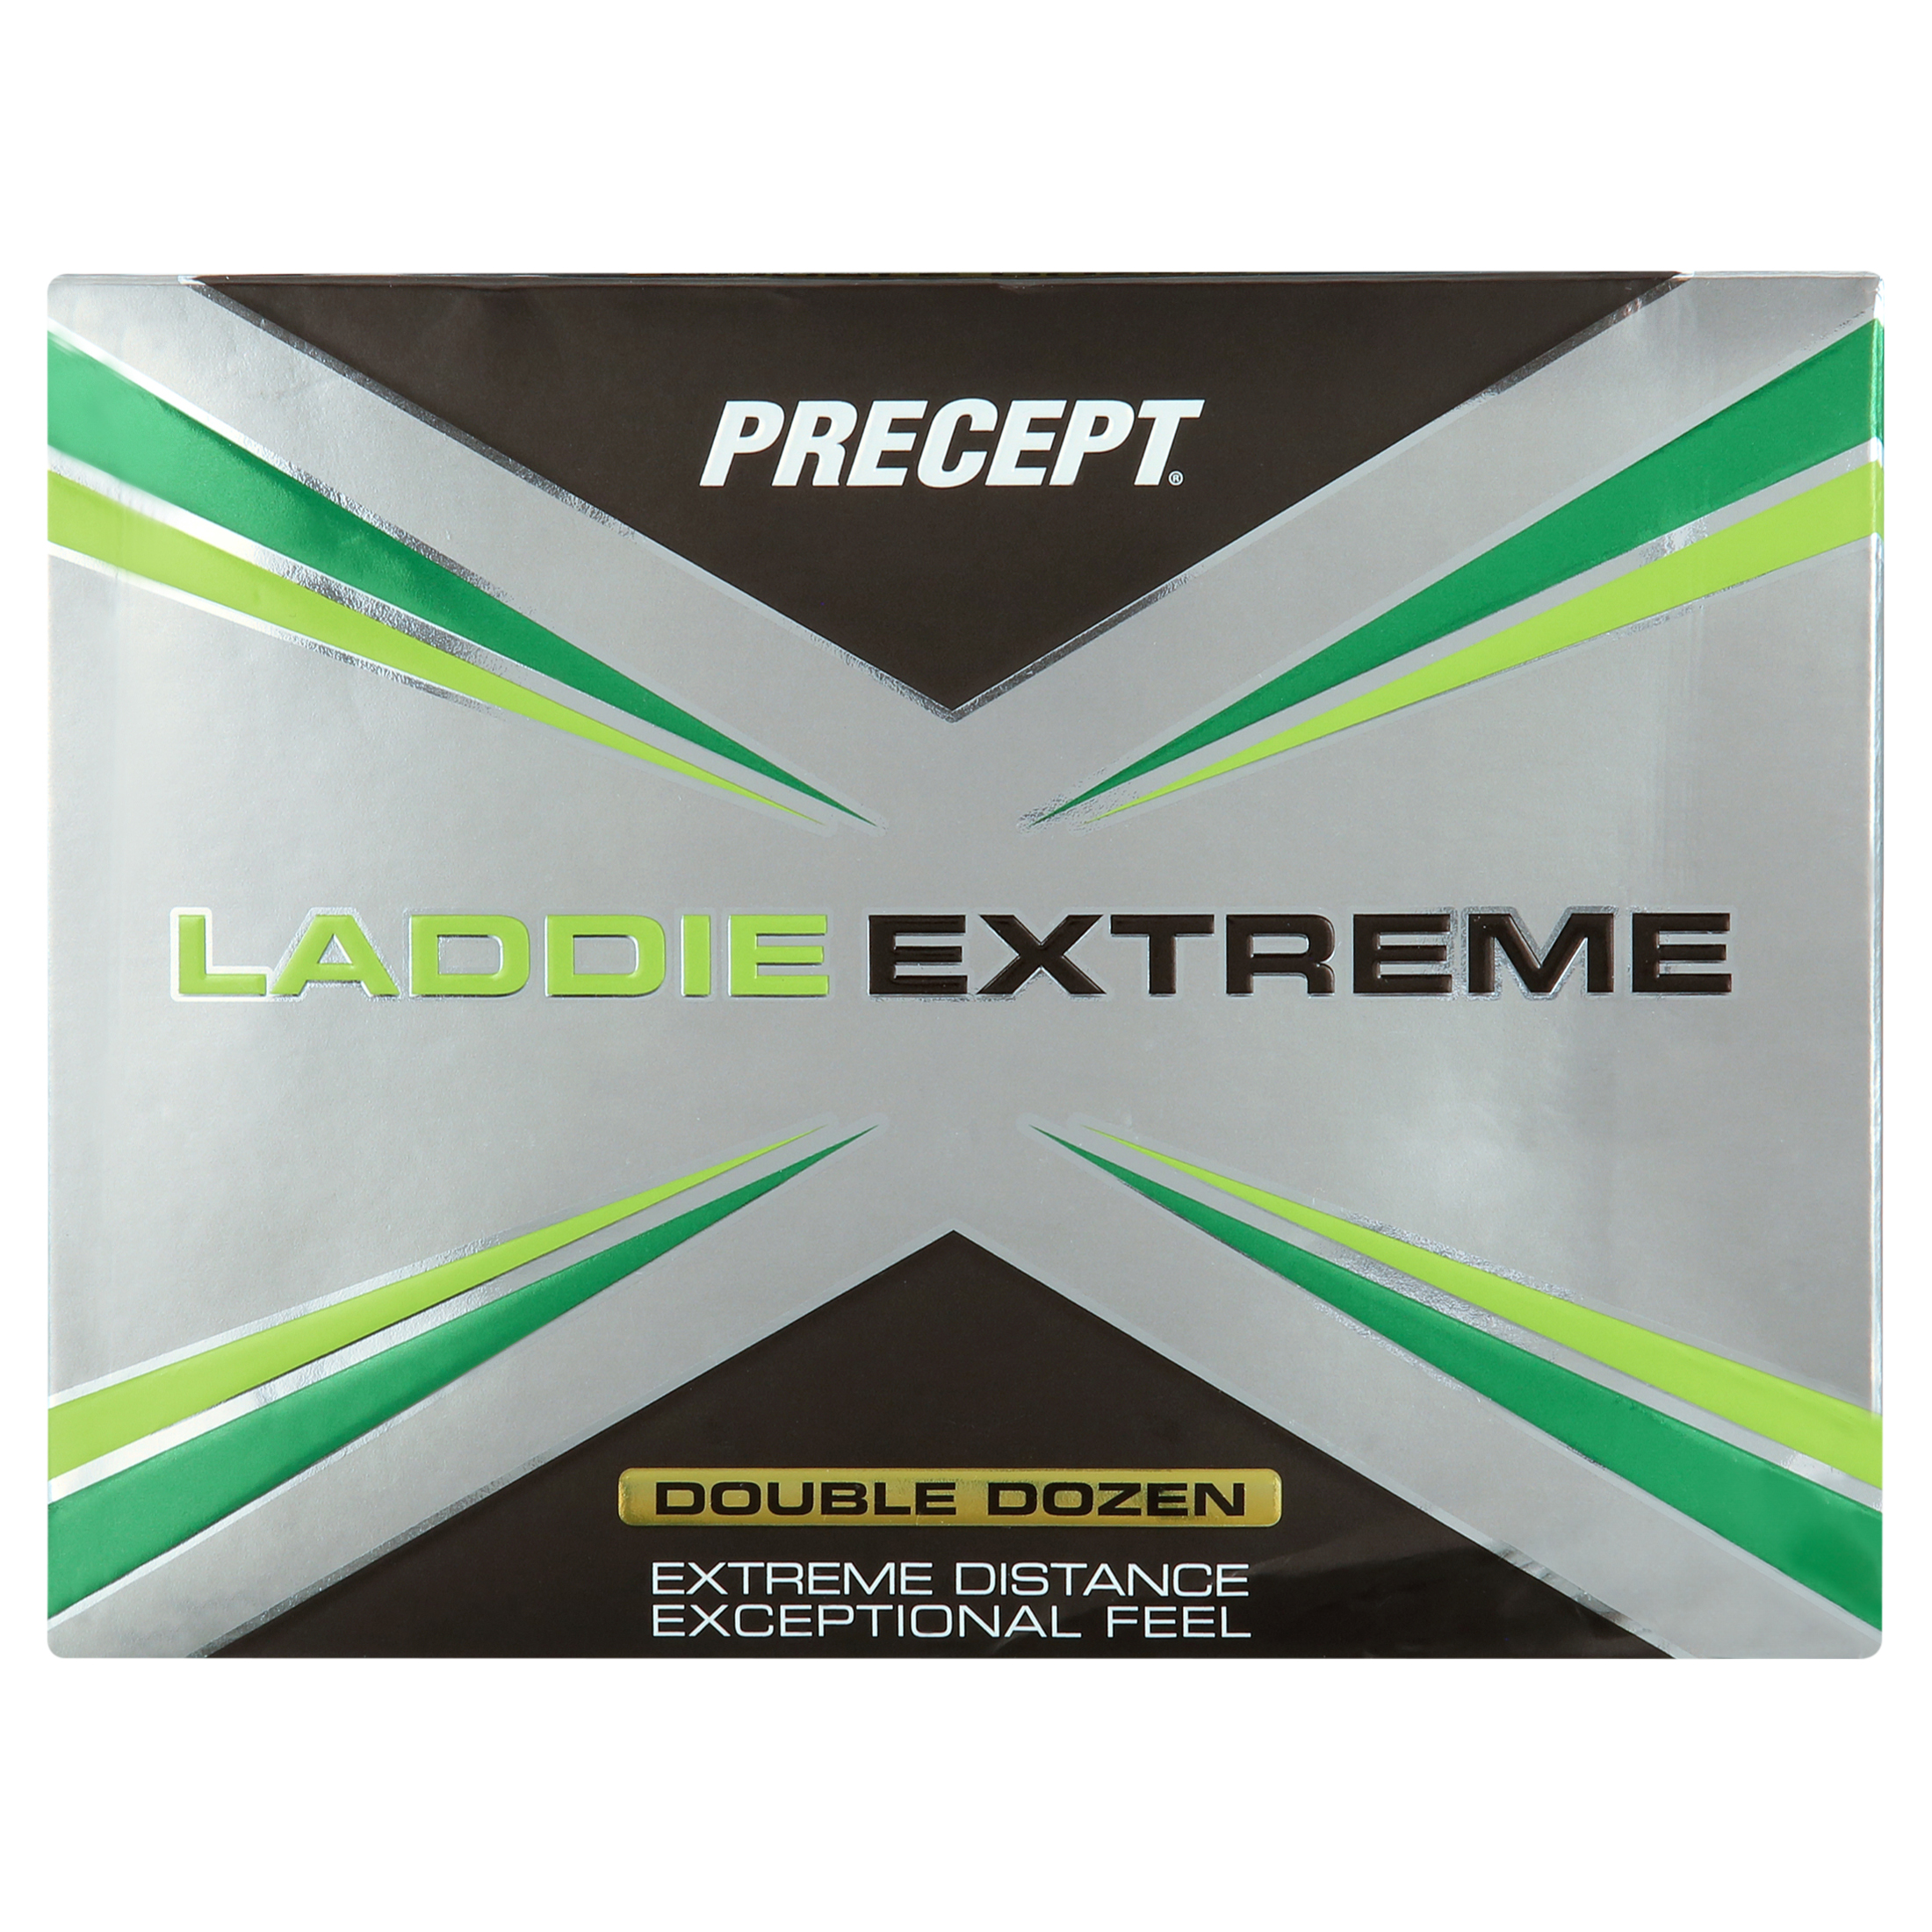 Bridgestone Golf 2017 Precept Laddie Extreme Golf Balls, Prior Generation, 24 Pack - image 3 of 5